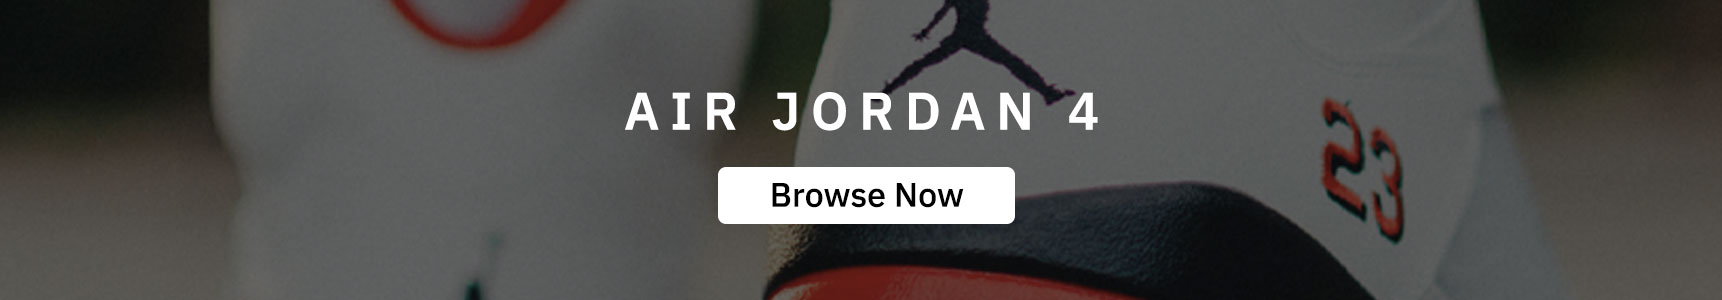 blog_inpost_air-jordan-4